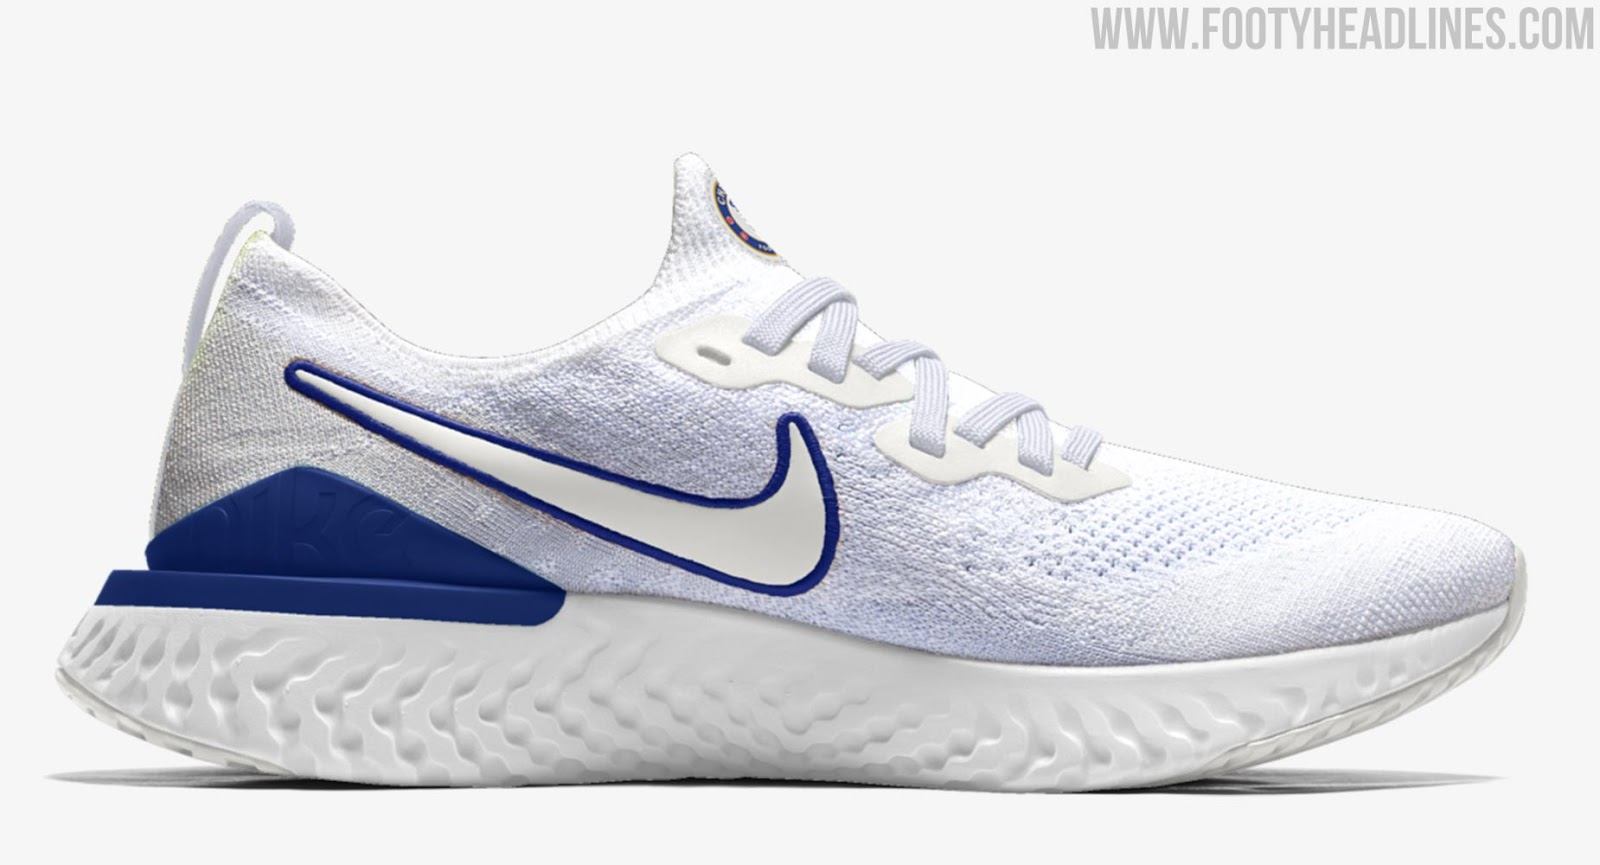 2 Nike Chelsea x Epic React Flyknit 2 Shoes Released - Footy Headlines